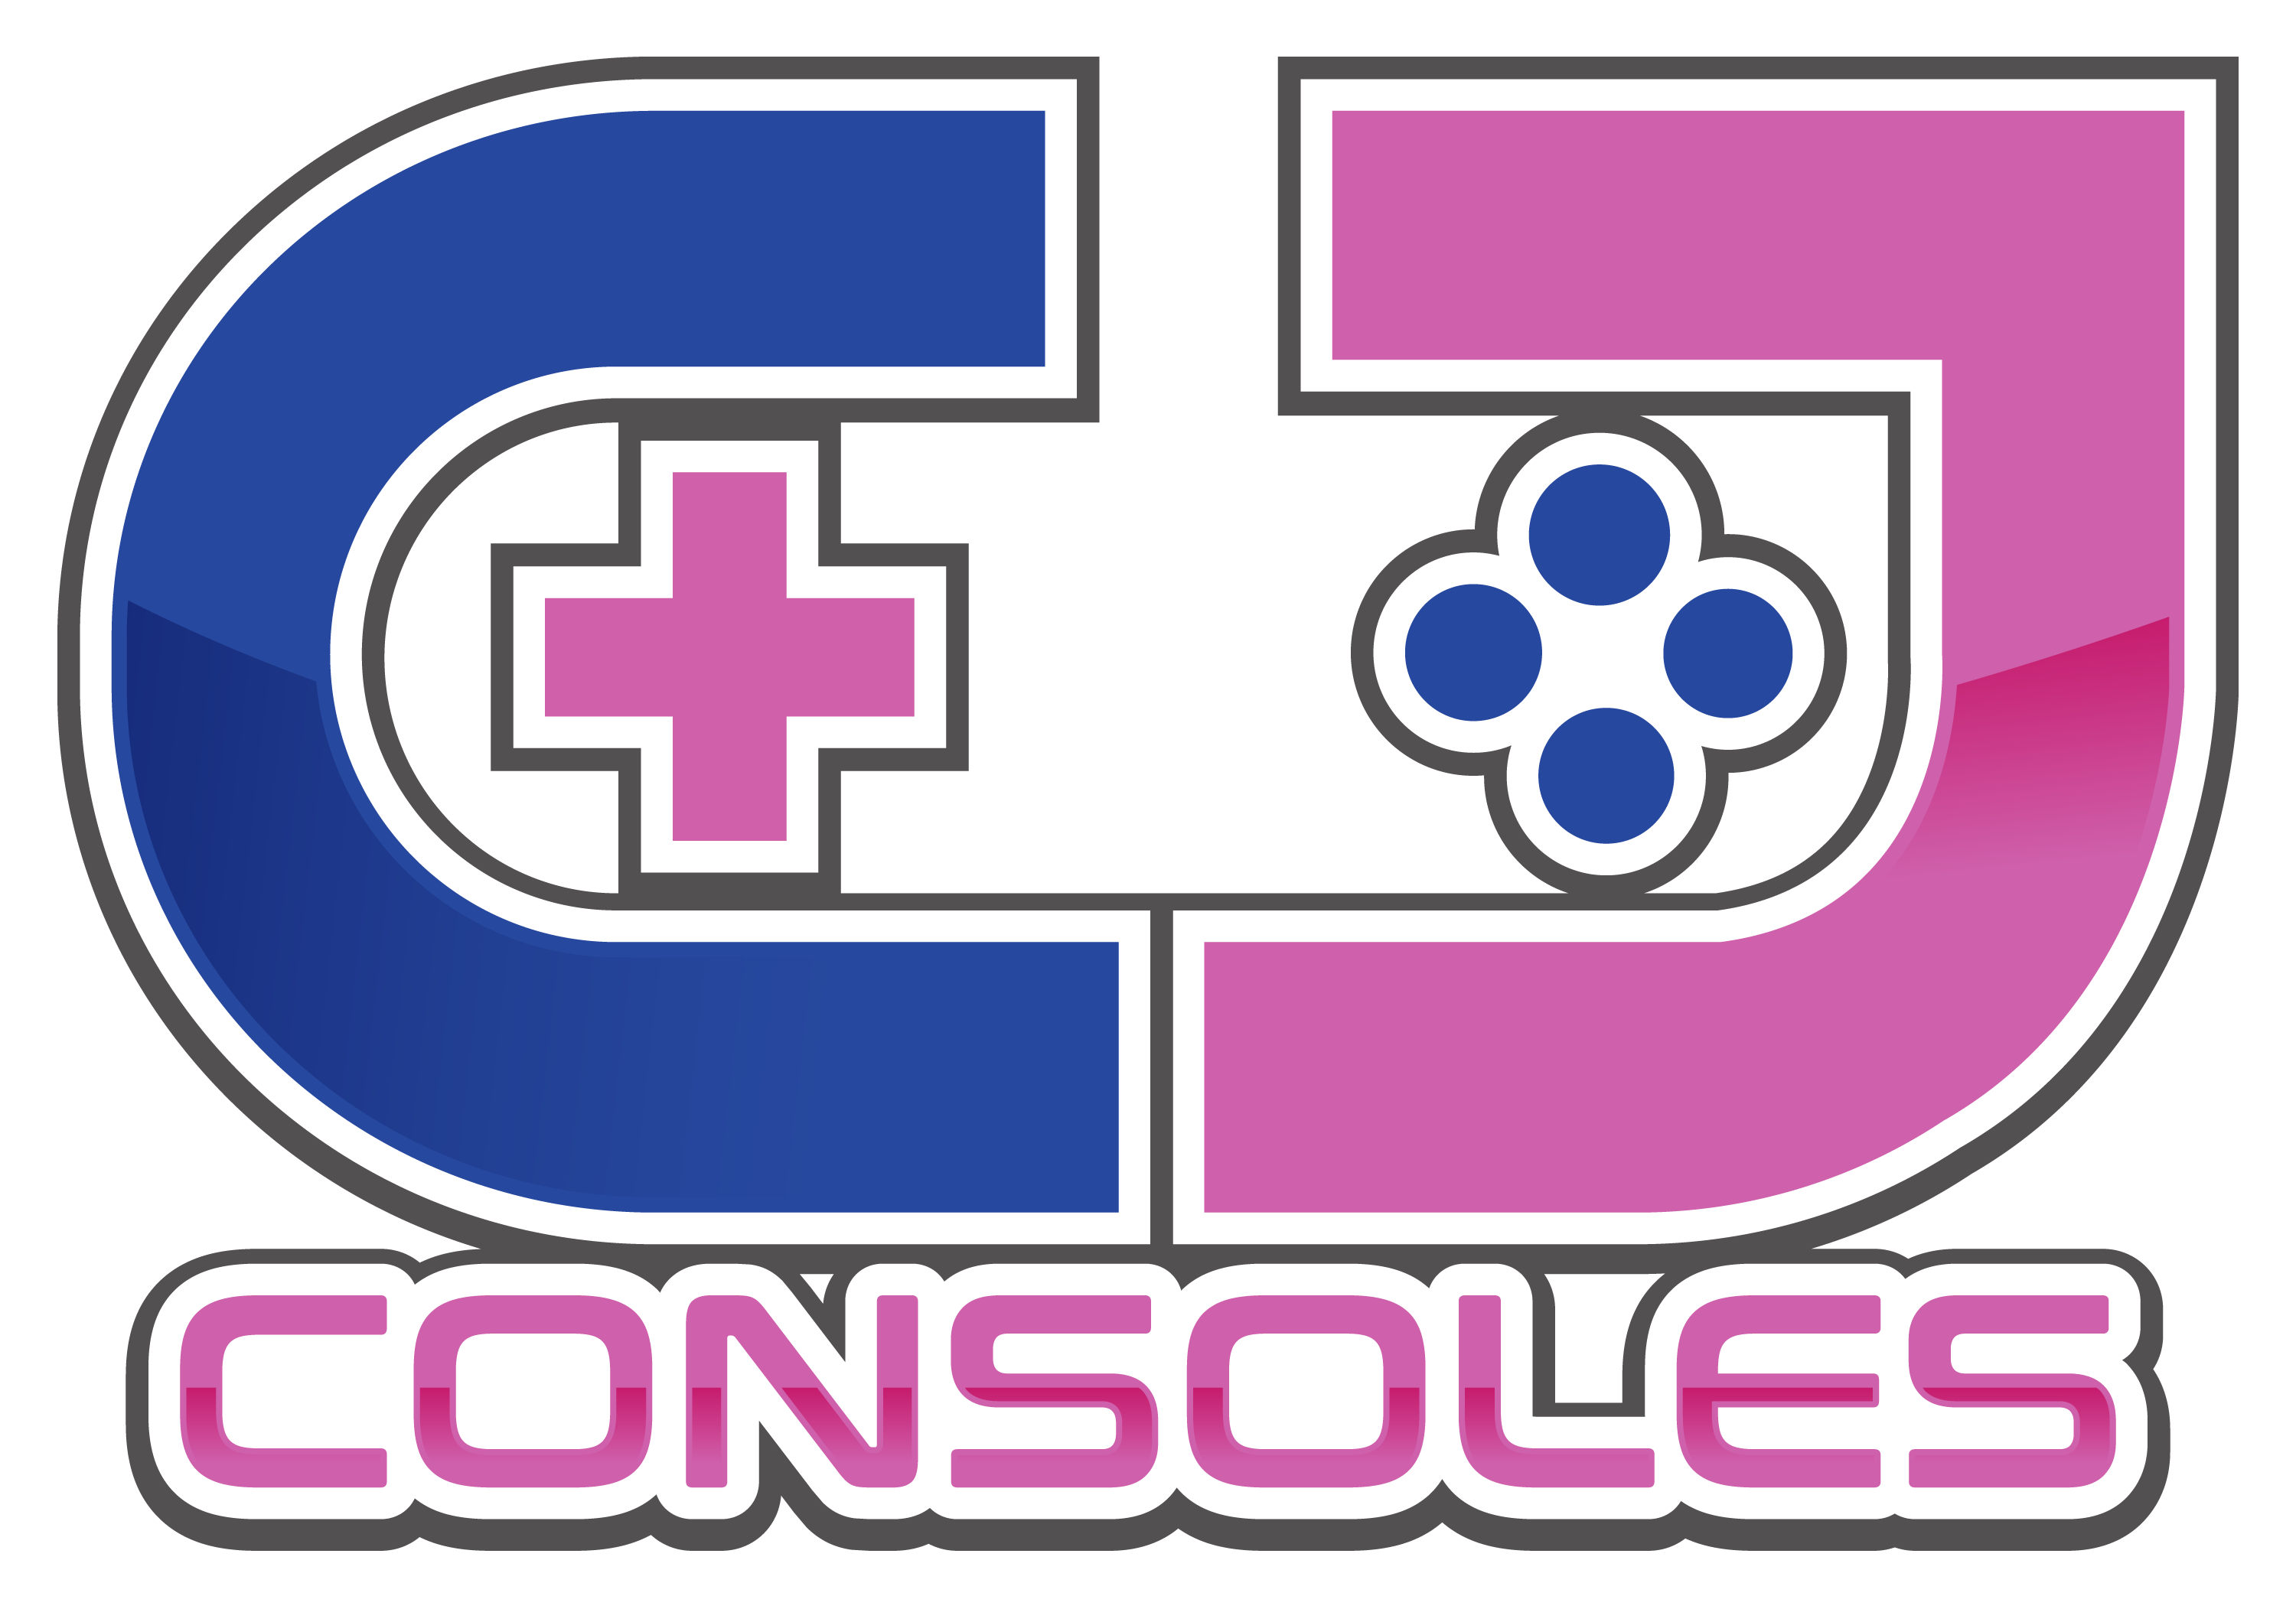 CJ Consoles - is using www.repero.me, a repair shop software